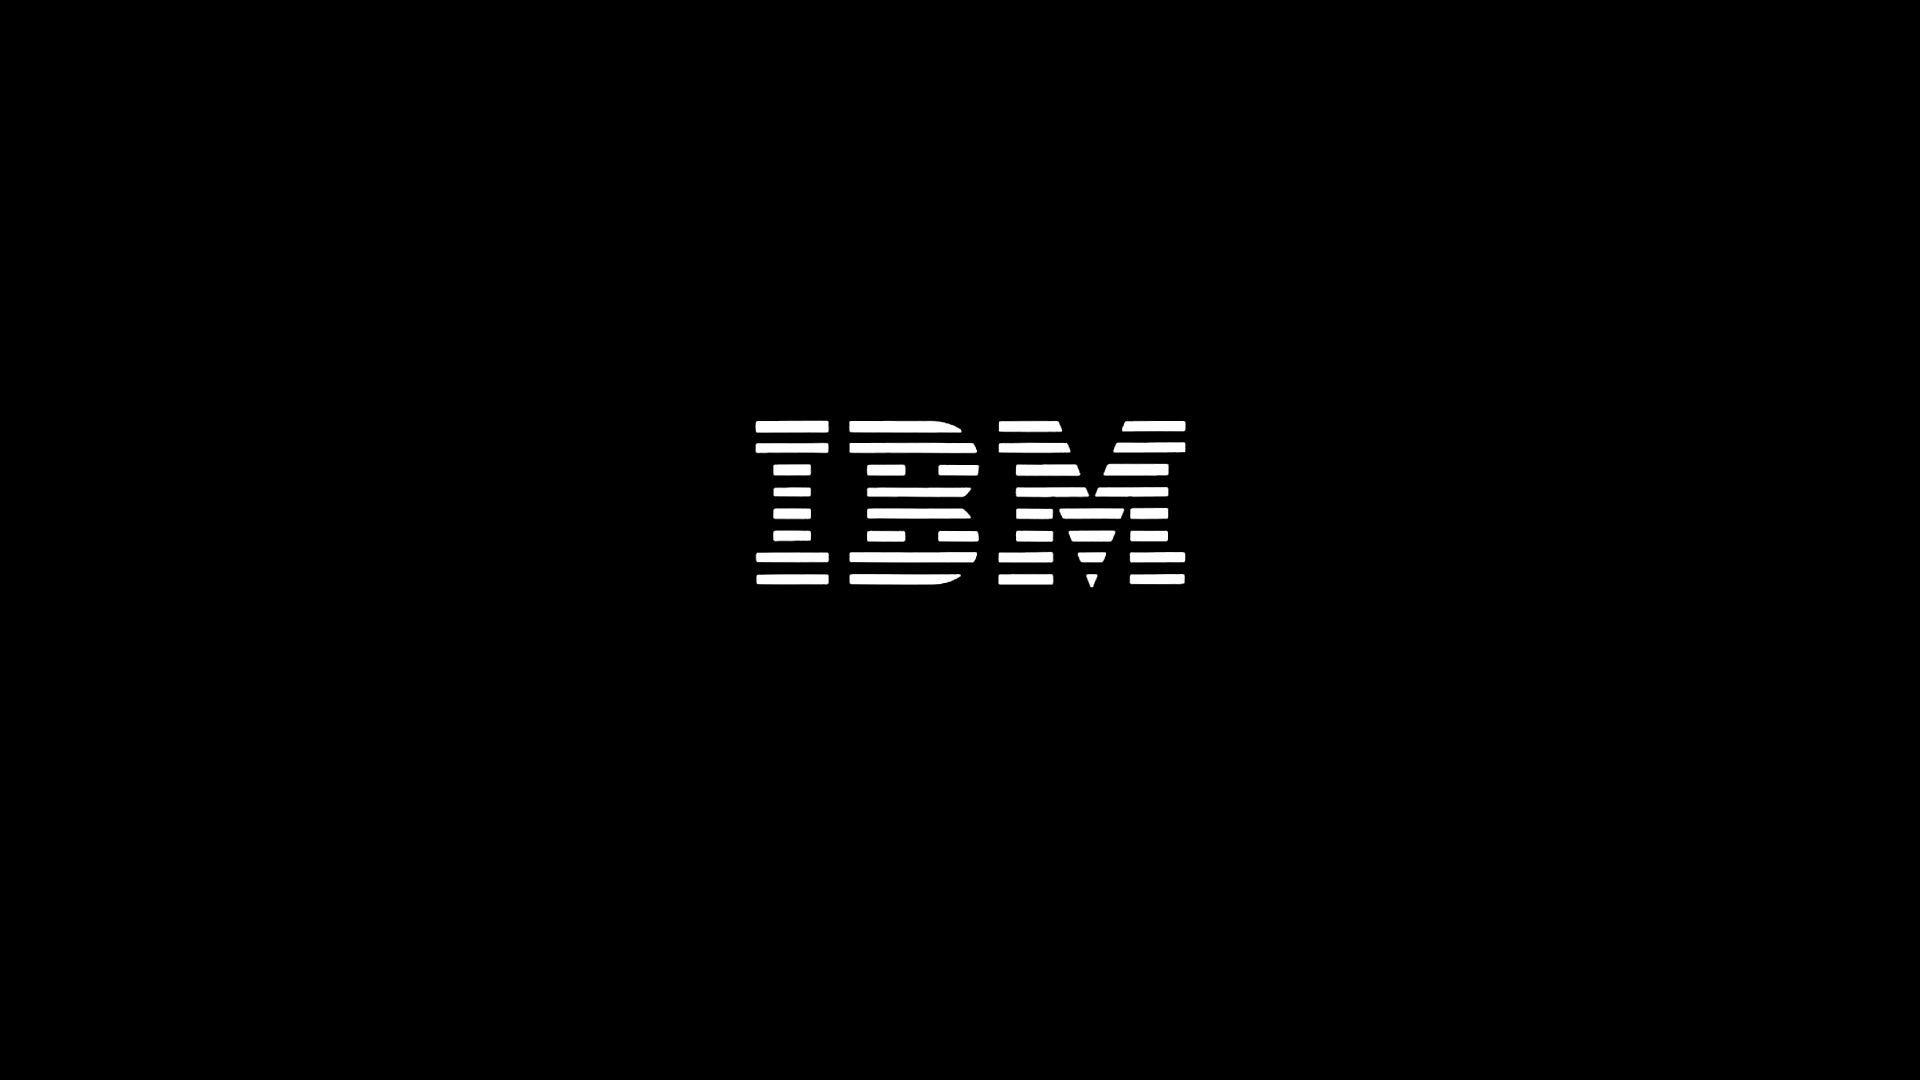 IBM Black Logo - IBM Brand Logo and Black Background Wallpaper - Wallpaper Stream